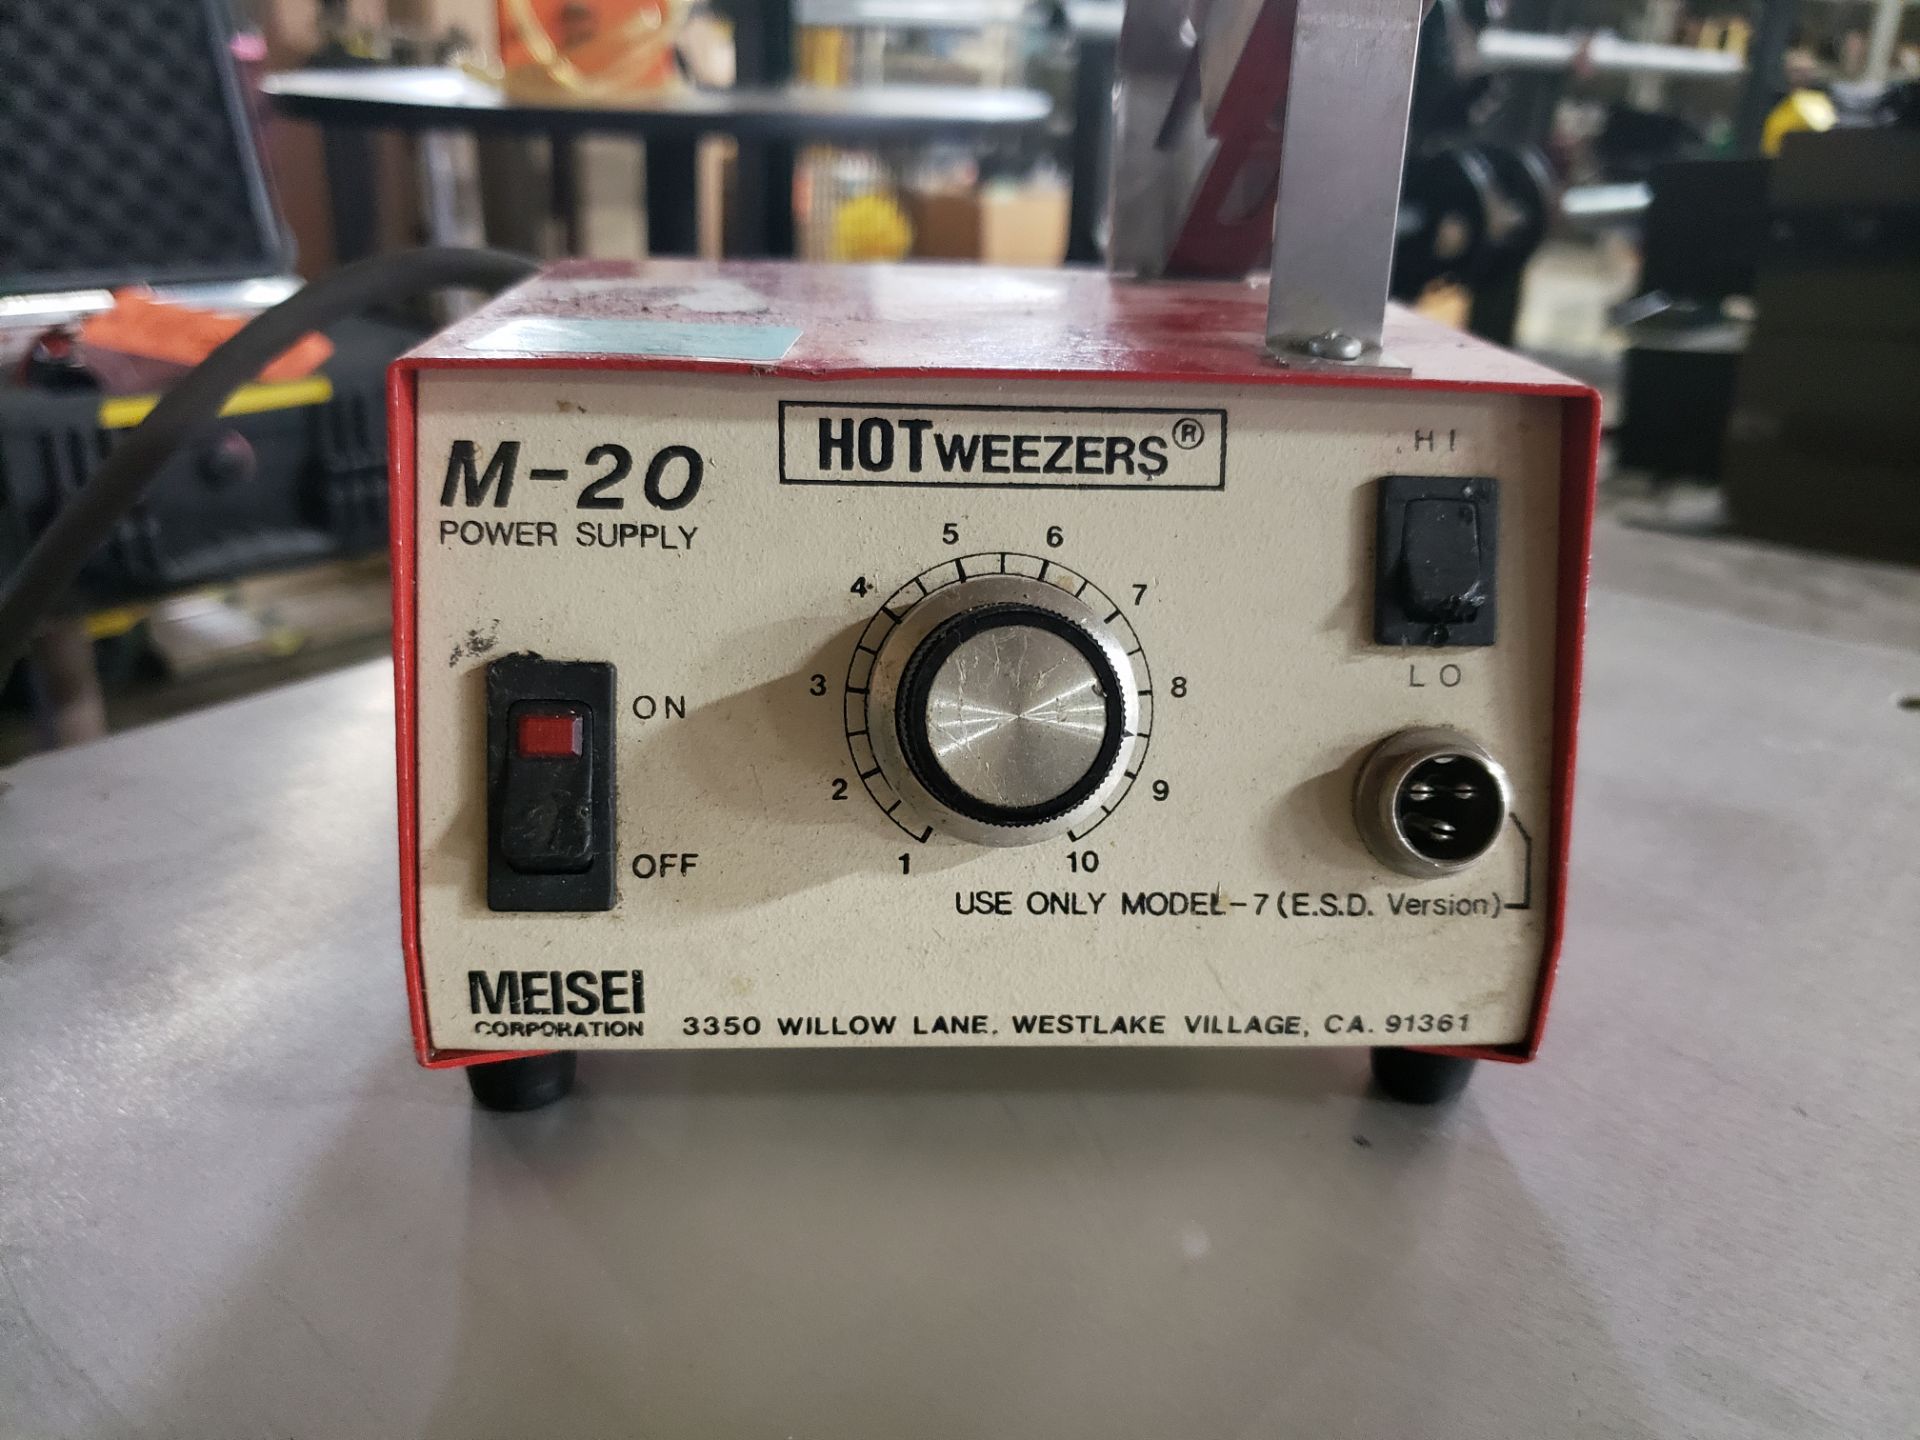 (6) MEISEI HOTWEEZER M-20 POWER SUPPLY - Image 2 of 2